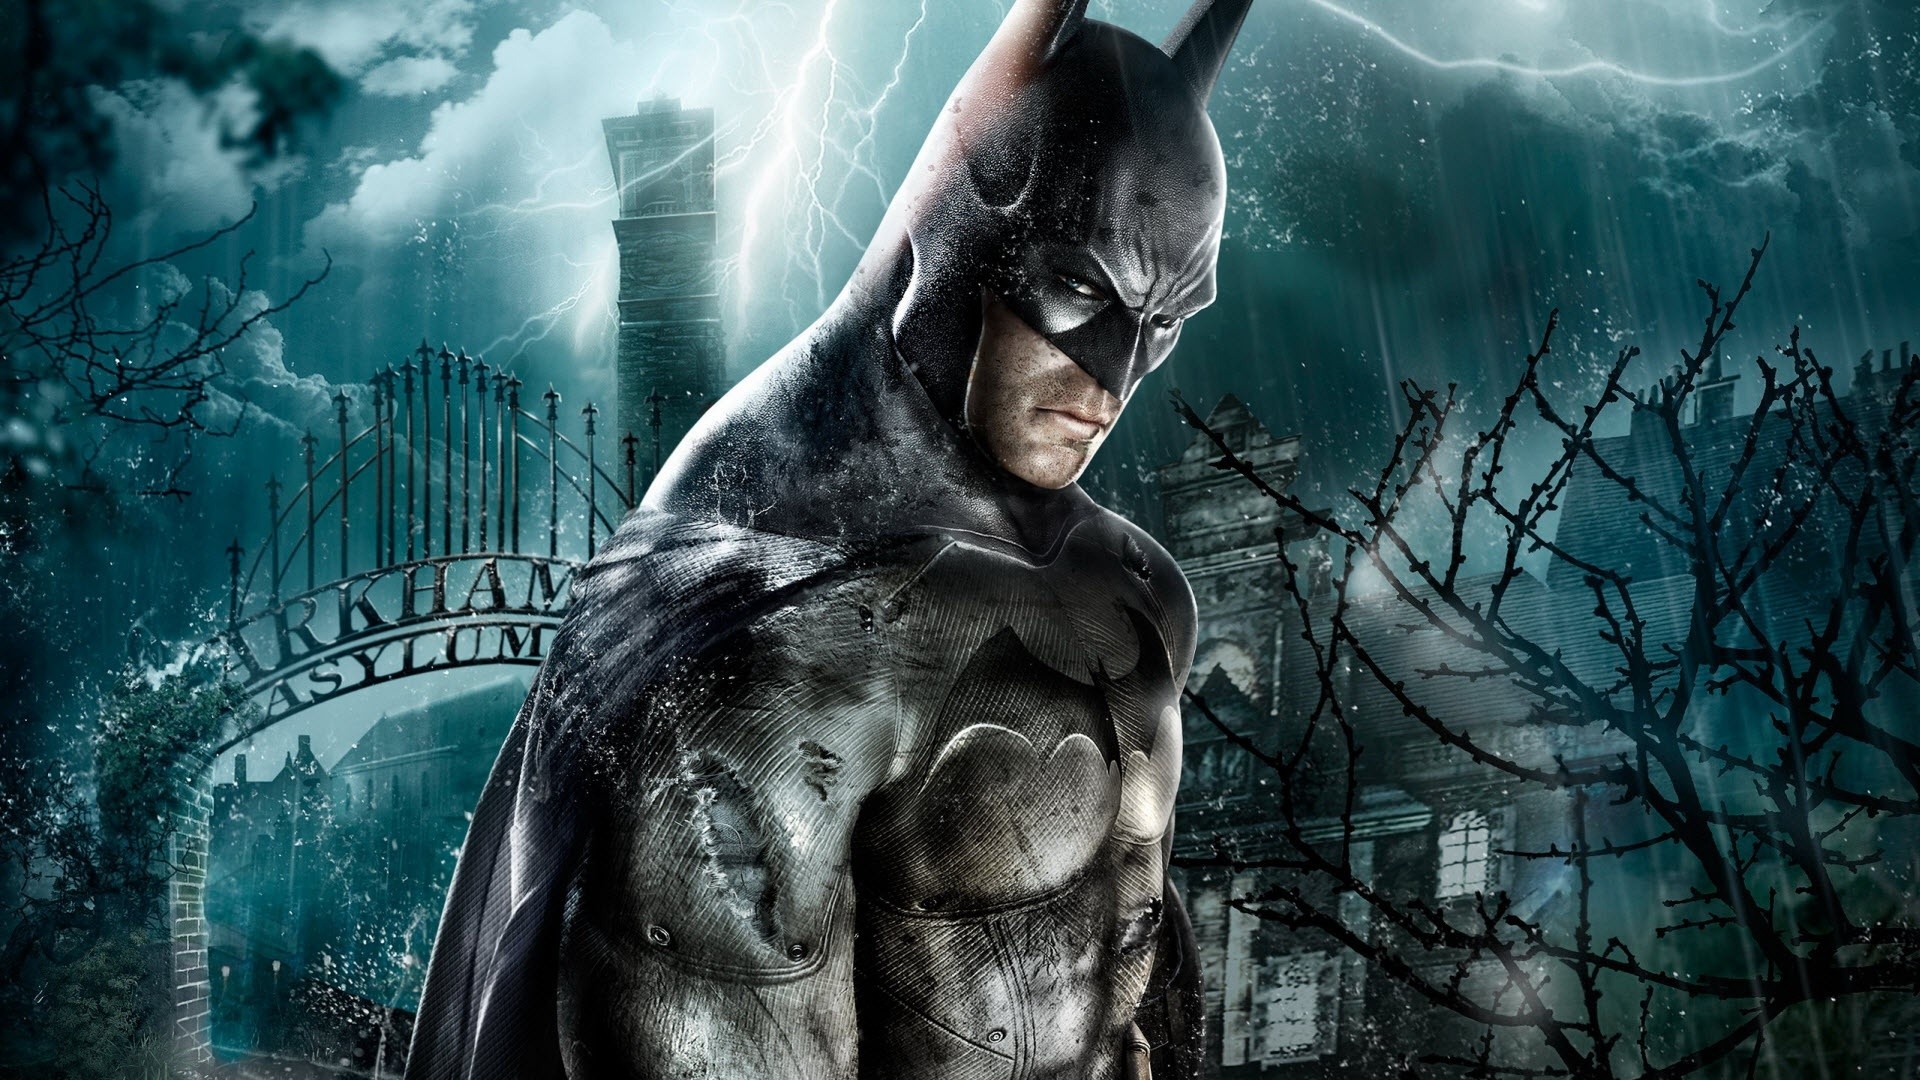 Batman Arkham Asylum 2. Бэтмен аркхам асайлум. Аркхем Asylum. Бэтмен асилум.